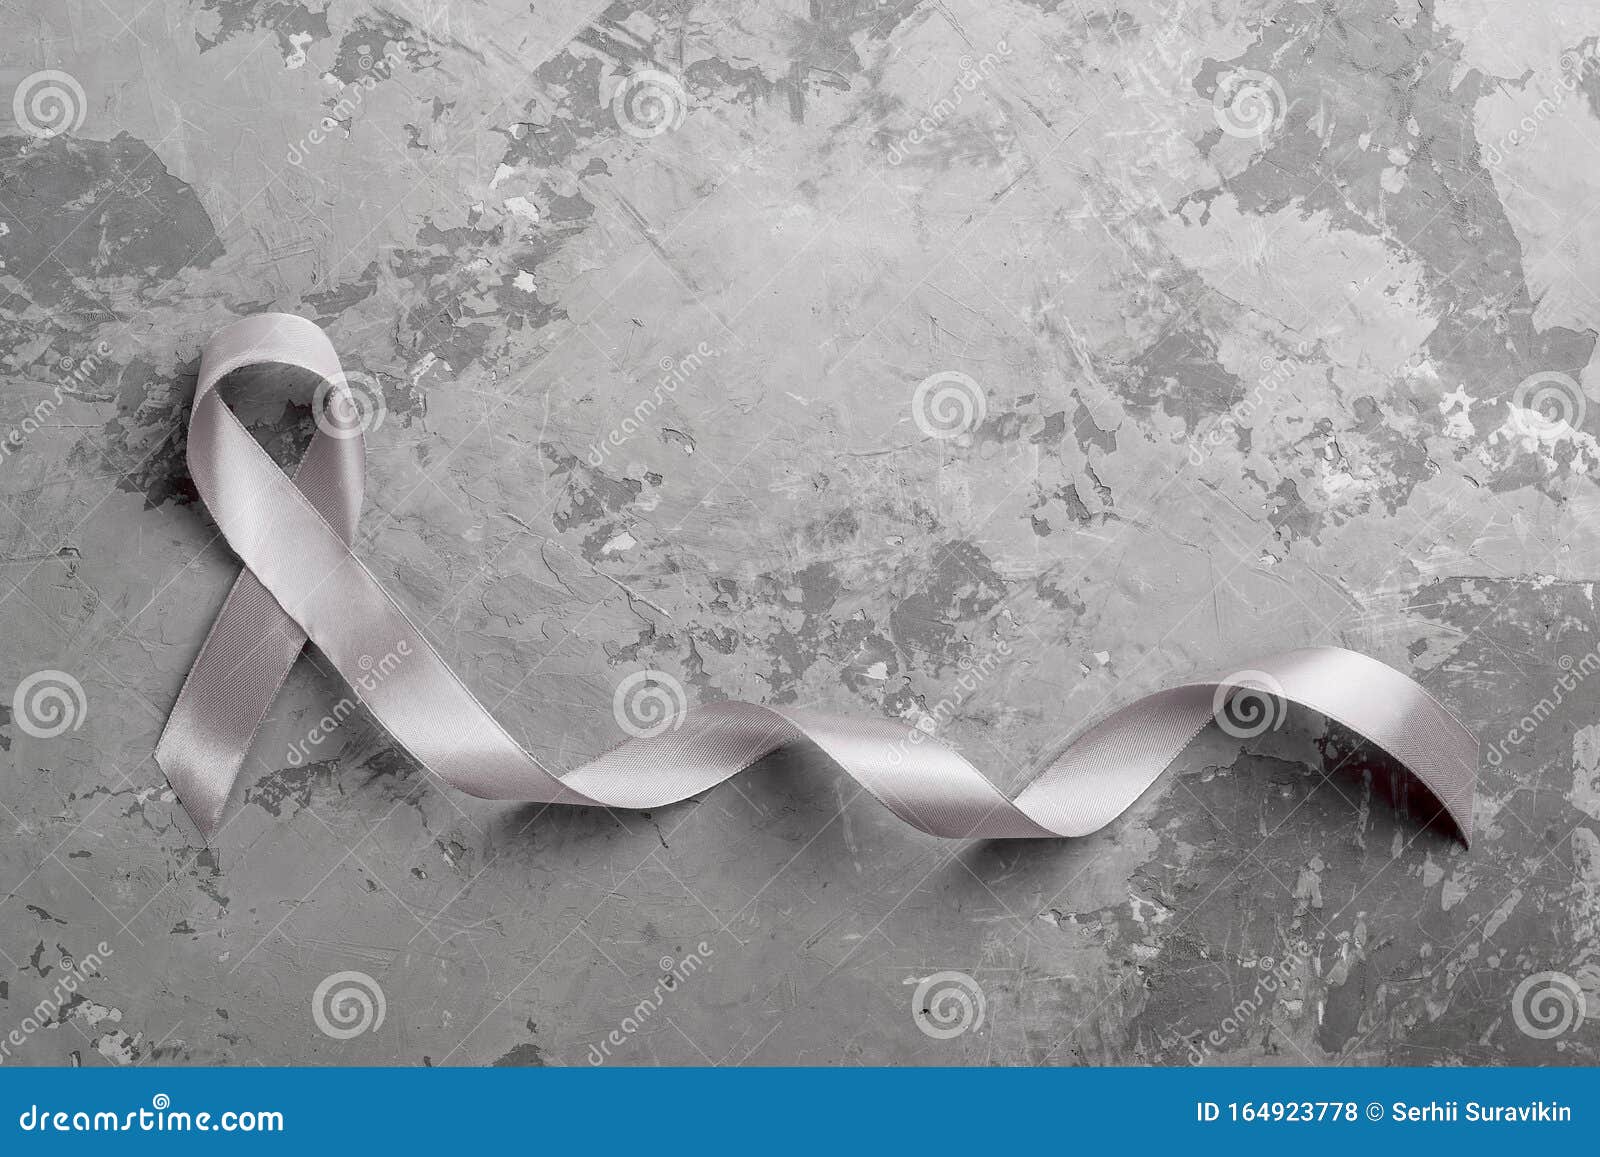 red silk ribbon, Stock image